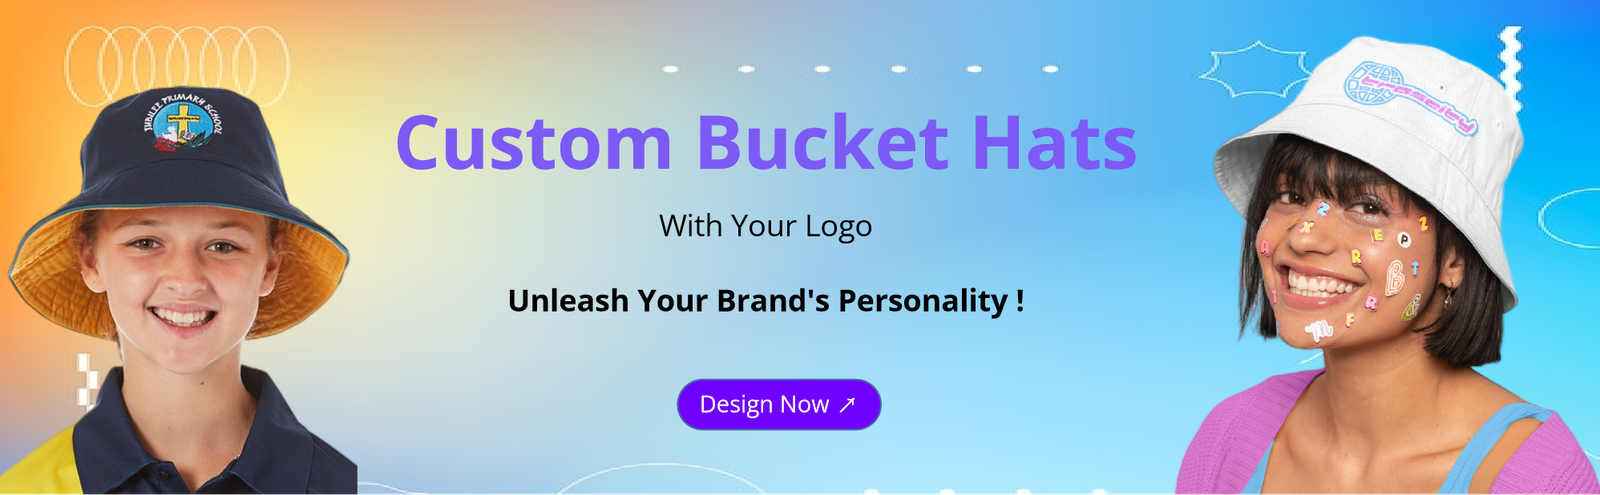 Custom Bucket hats with your logo